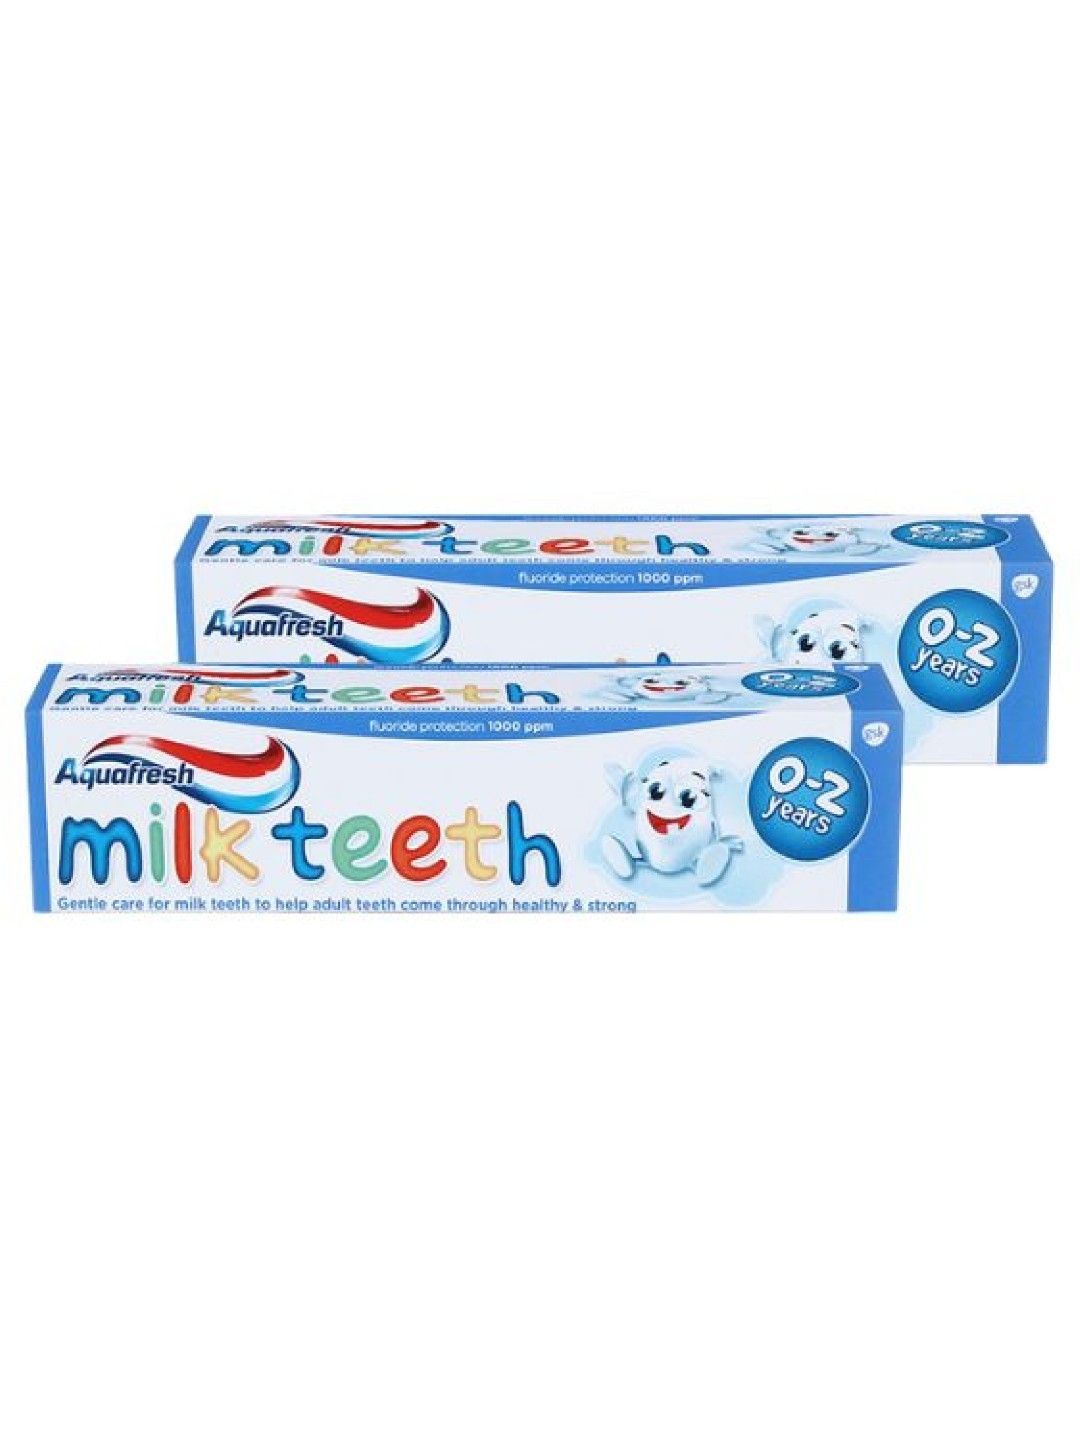 Aquafresh Milk Teeth Toothpaste 50ml x 2